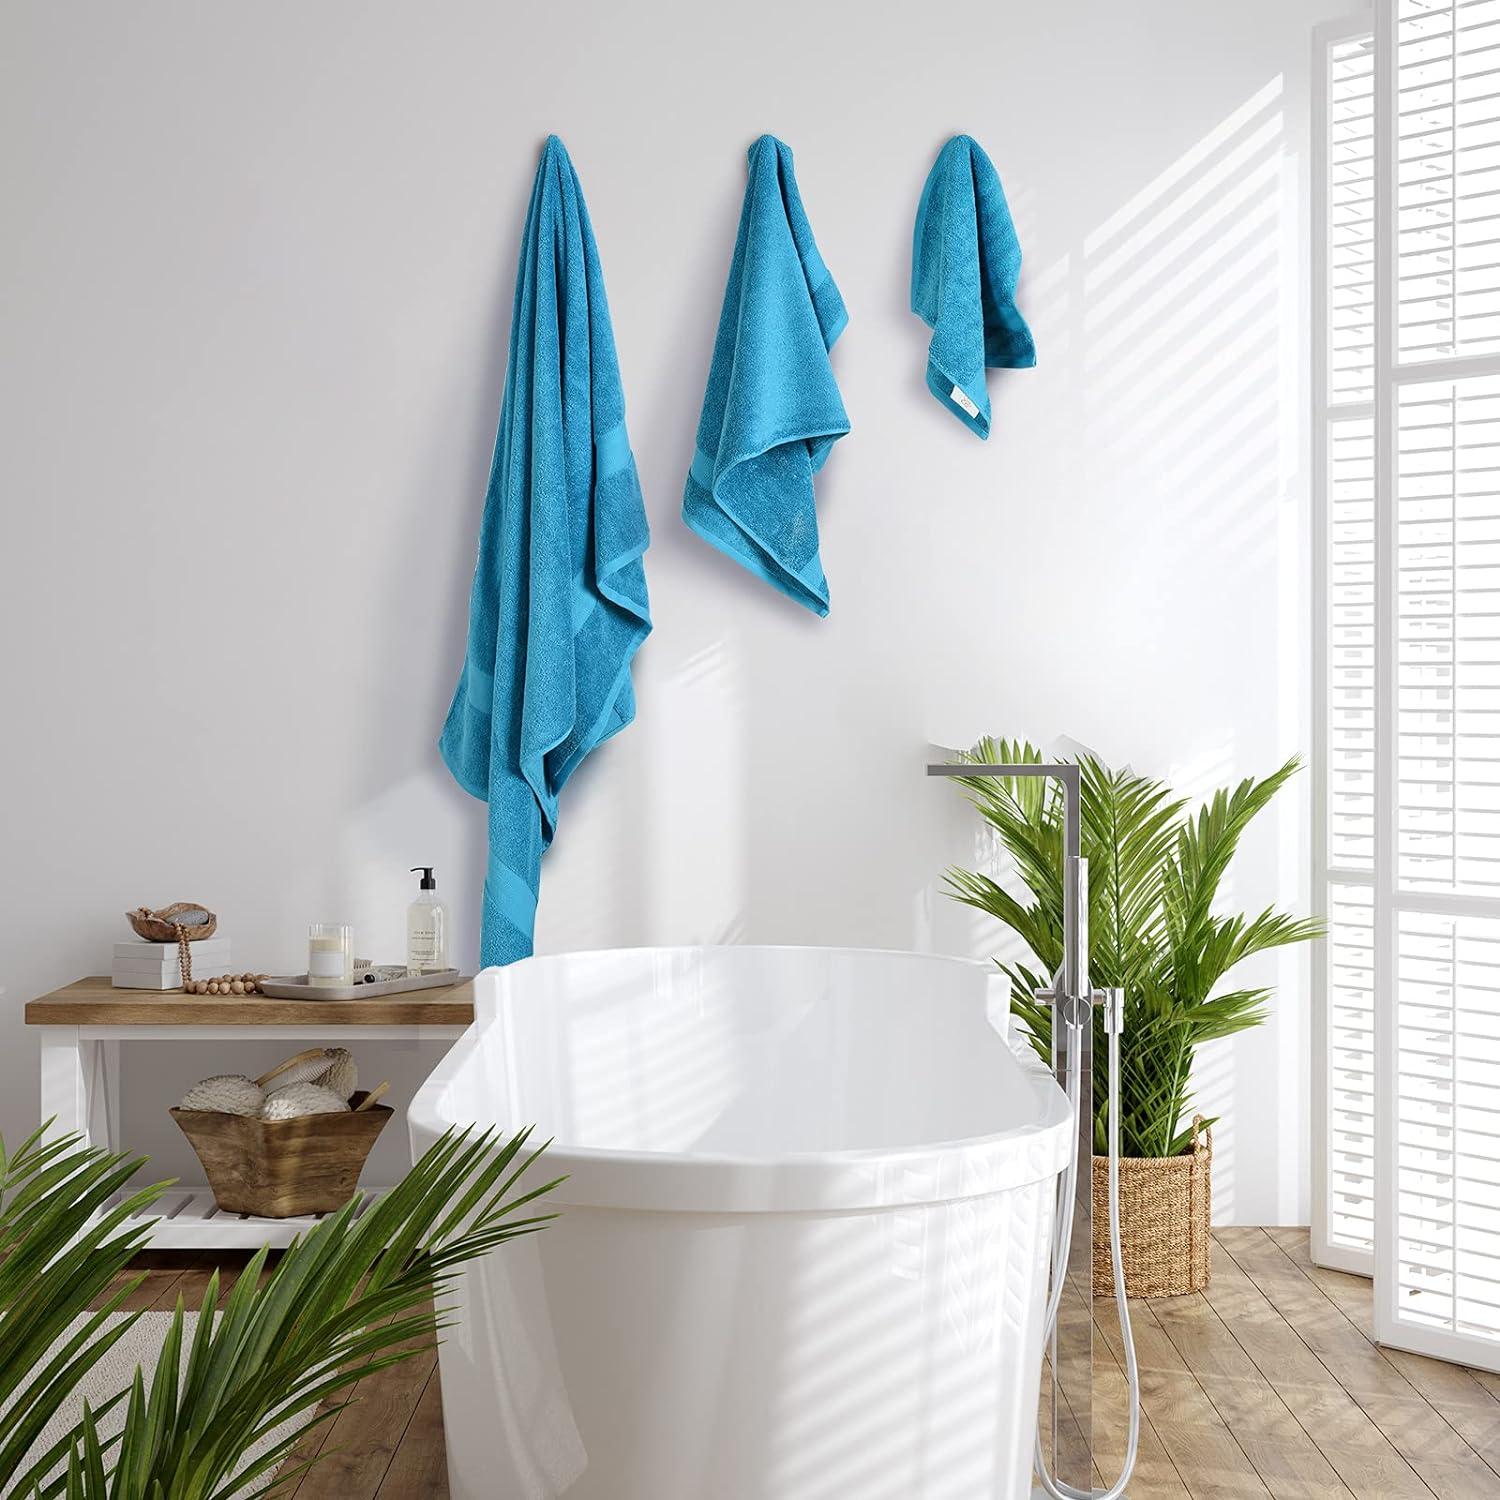 Luxury Bath Towels Set 3 Pack, Towel Set 100% Cotton ( 1 Large Bath Towel,  1 Hand Towel, 1 Washcloth )